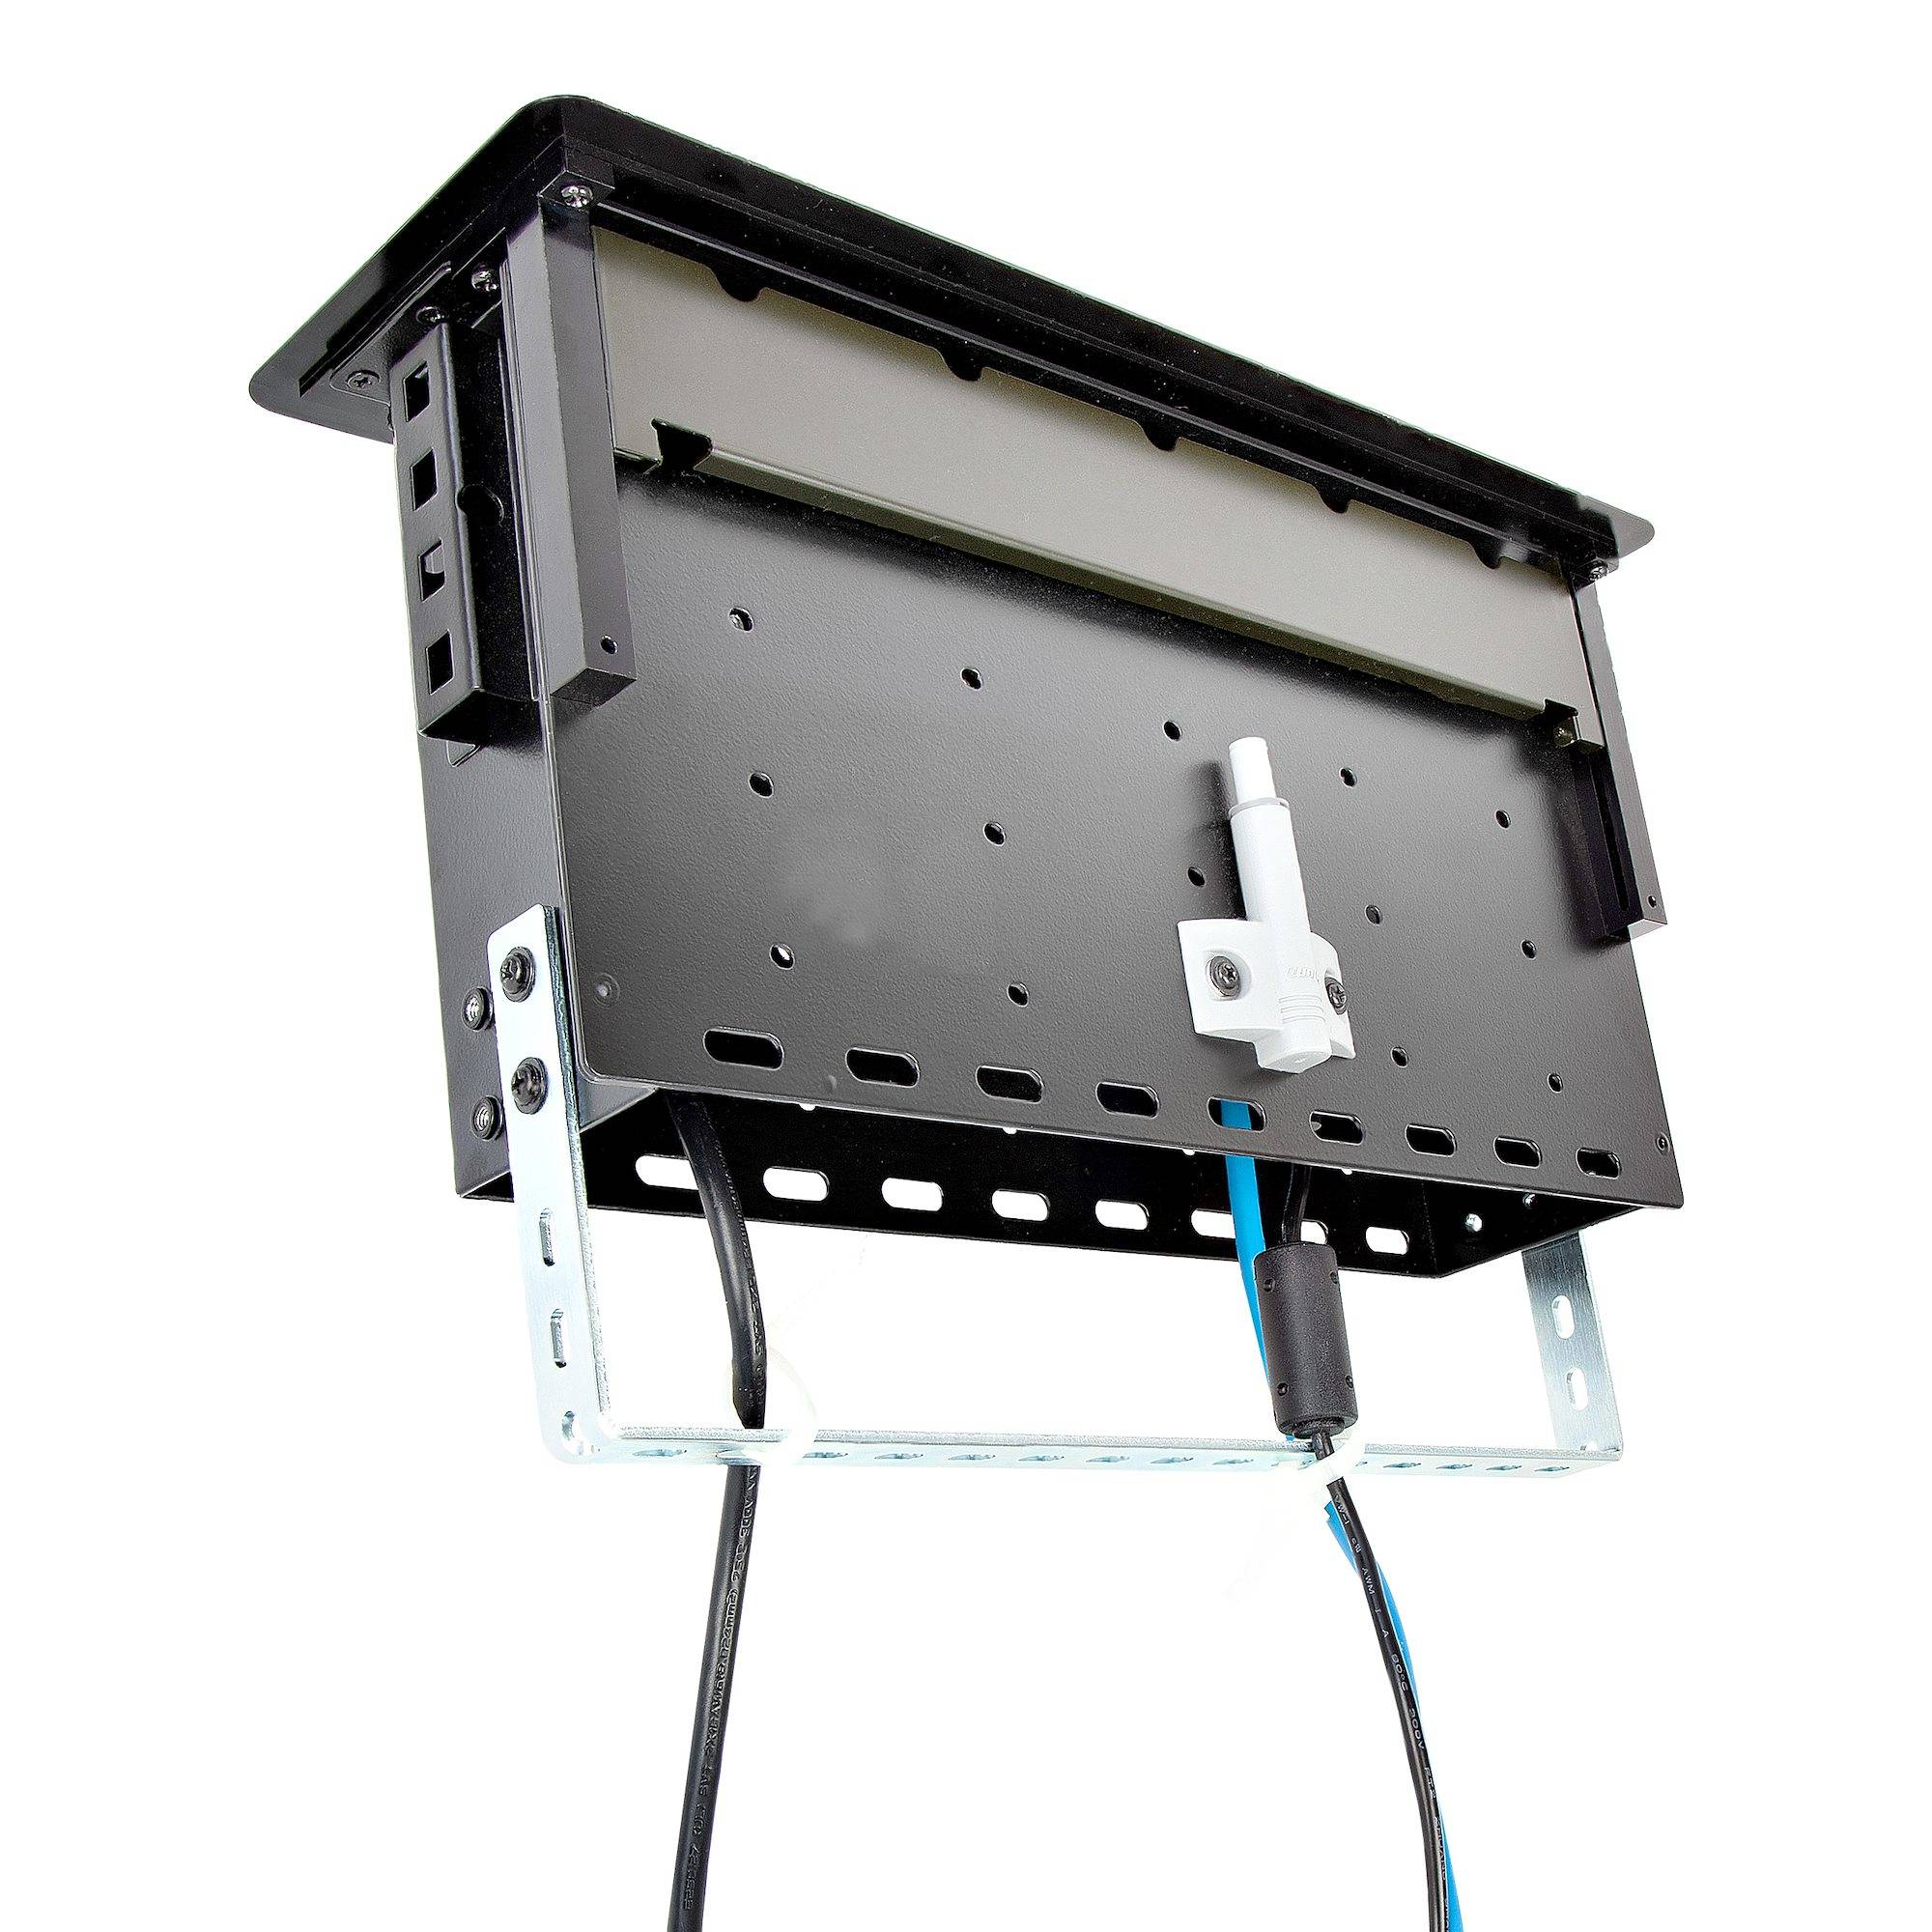 Rca Informatique - image du produit : TABLE BOX WITH A/V AND POWER